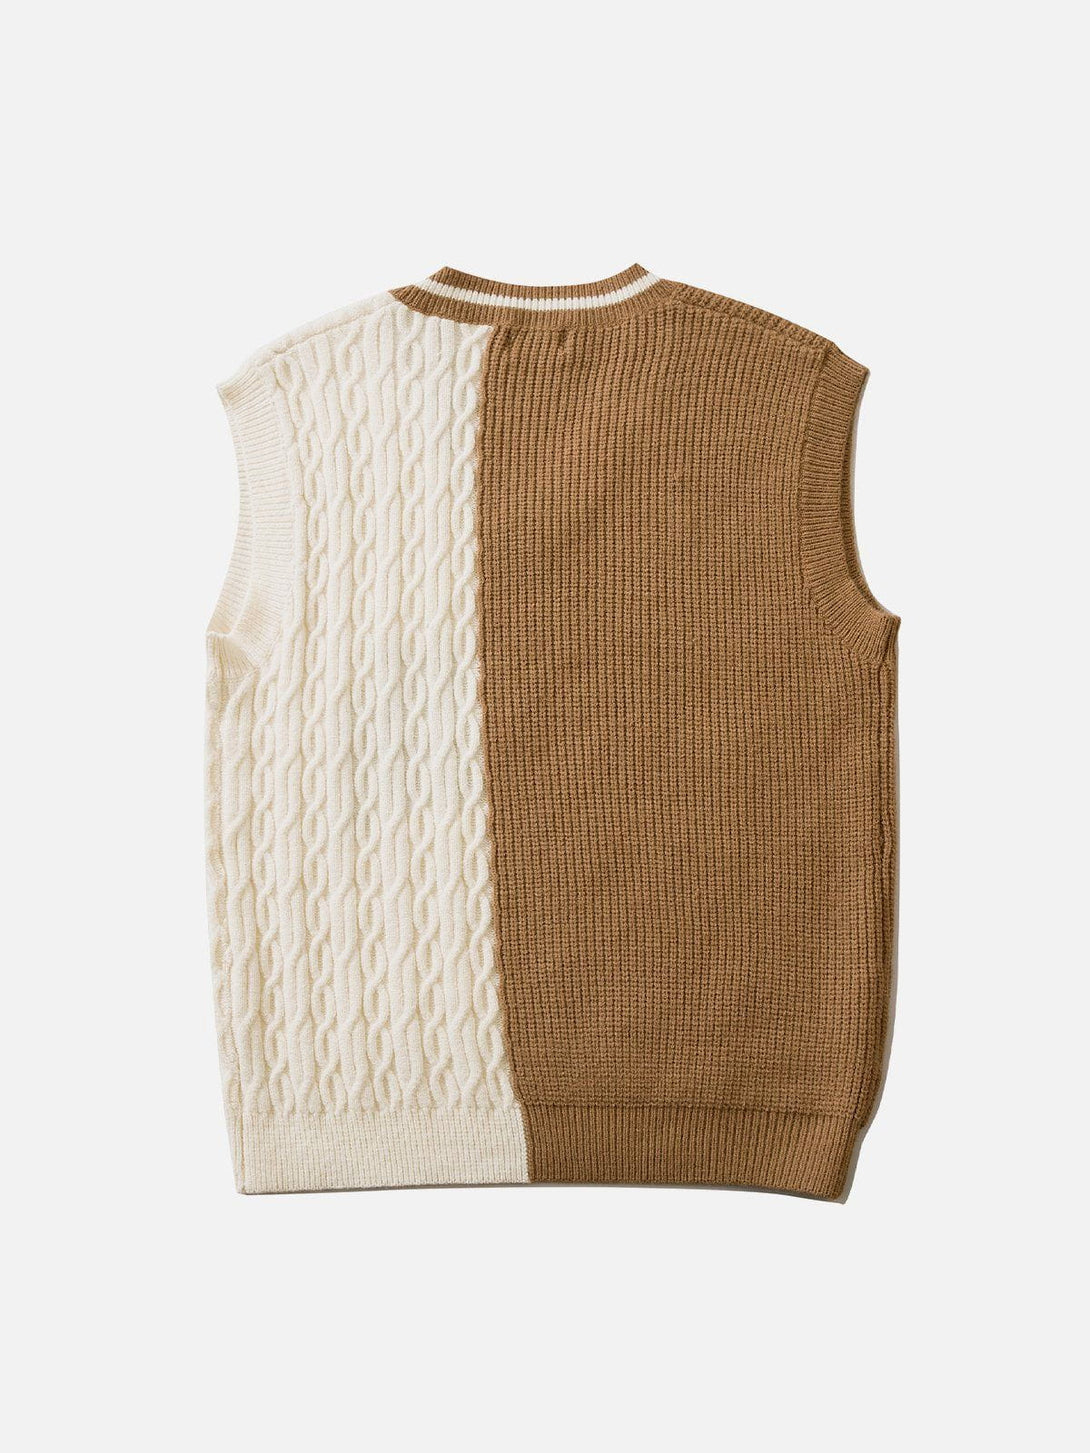 Levefly - "Andreilee" Print Sweater Vest - Streetwear Fashion - levefly.com